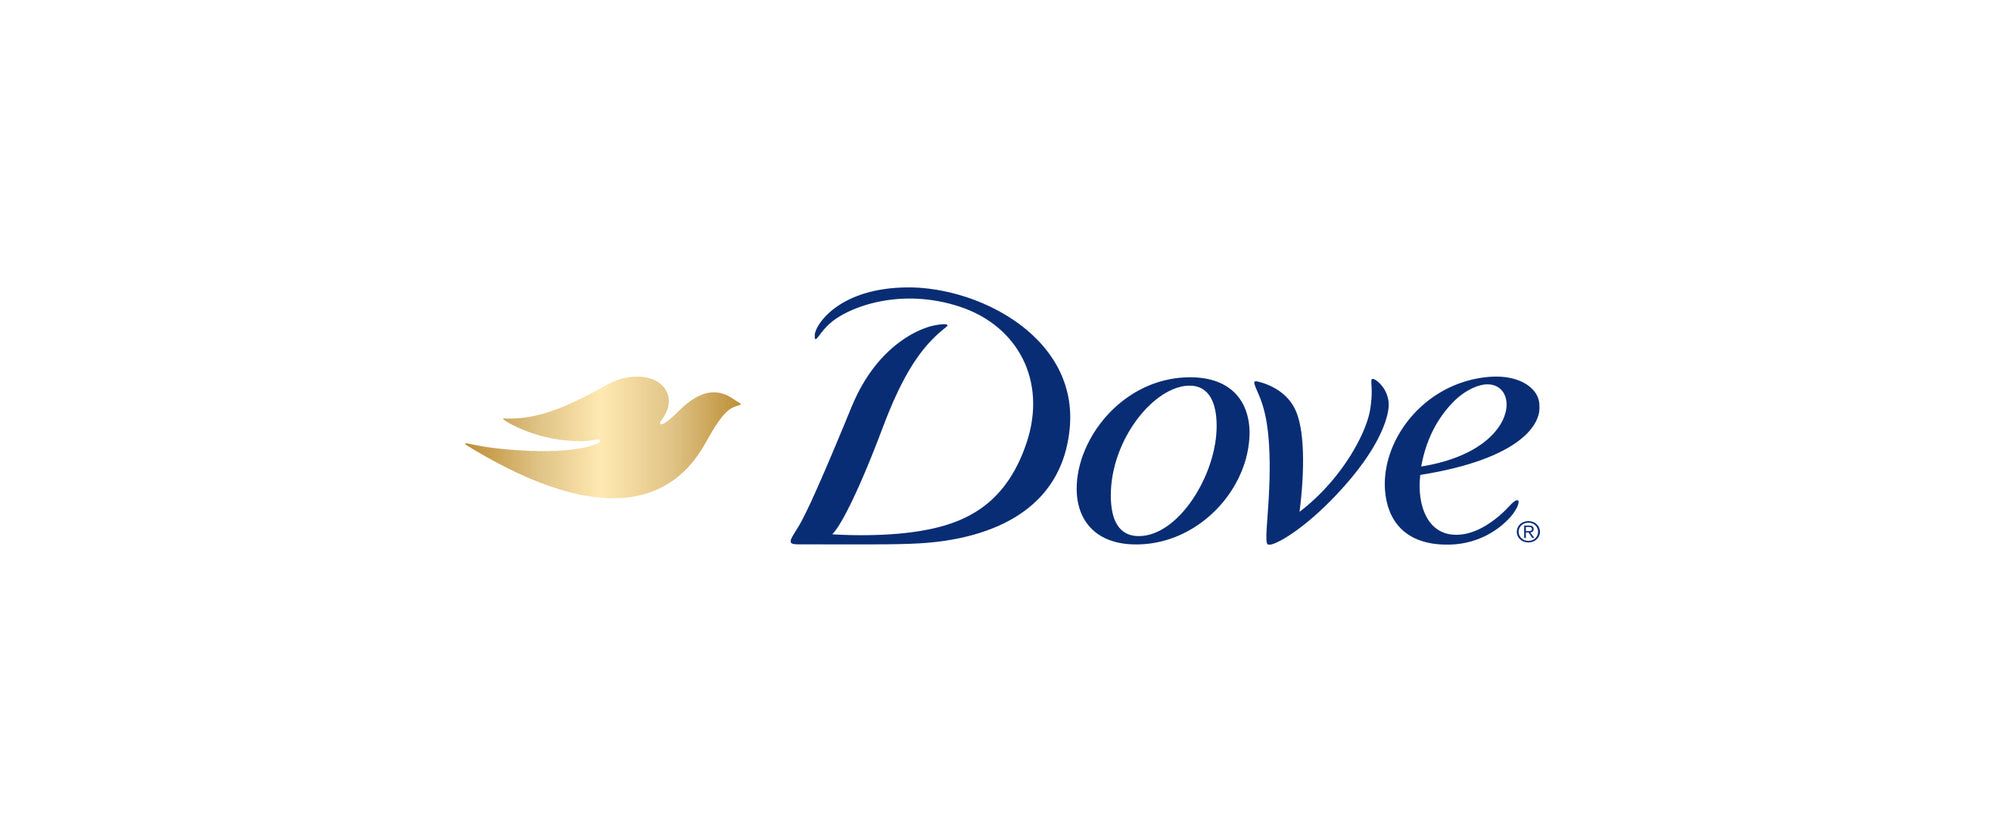 Dove Polycultural Collection